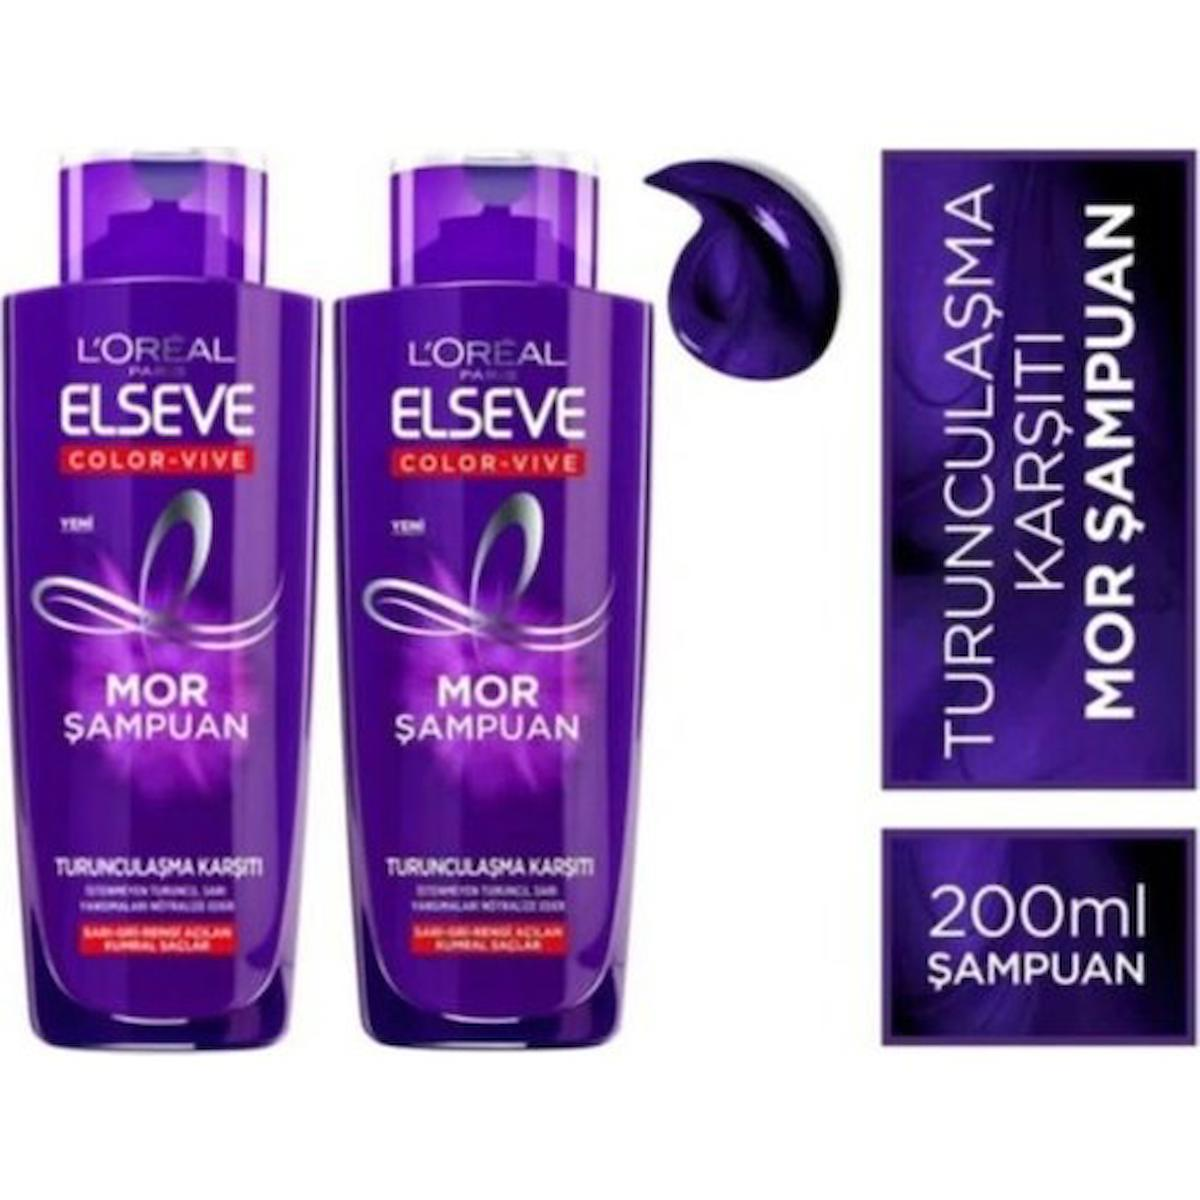 L'Oréal Paris Elseve Color Vive Turunculaşma Karşıtı Mor Şampuan 2x200 ml